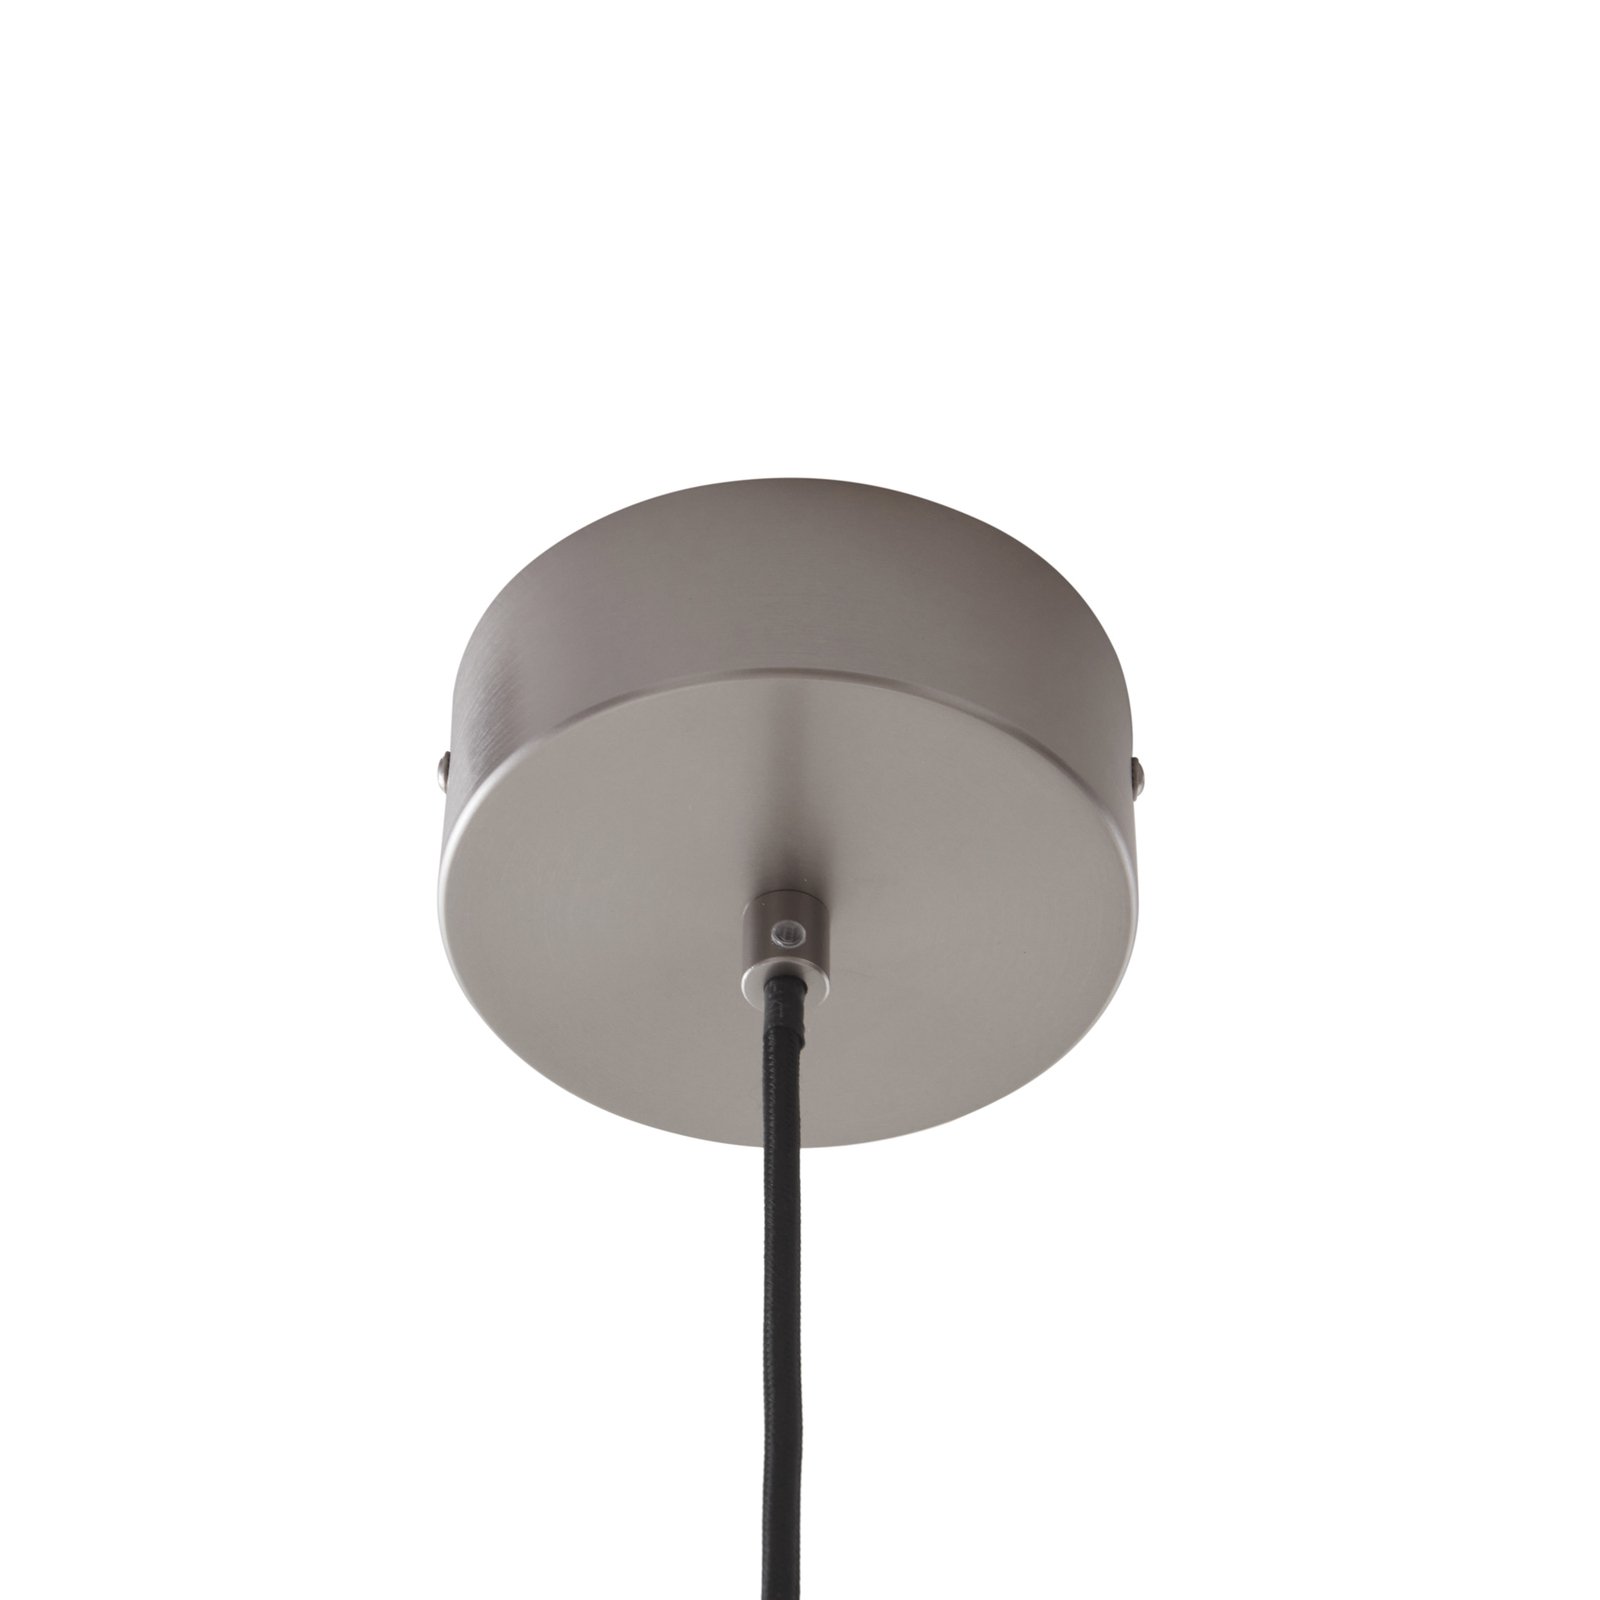 Lucande LED-es függőlámpa Faelinor, szürke, alumínium, Ø 35 cm